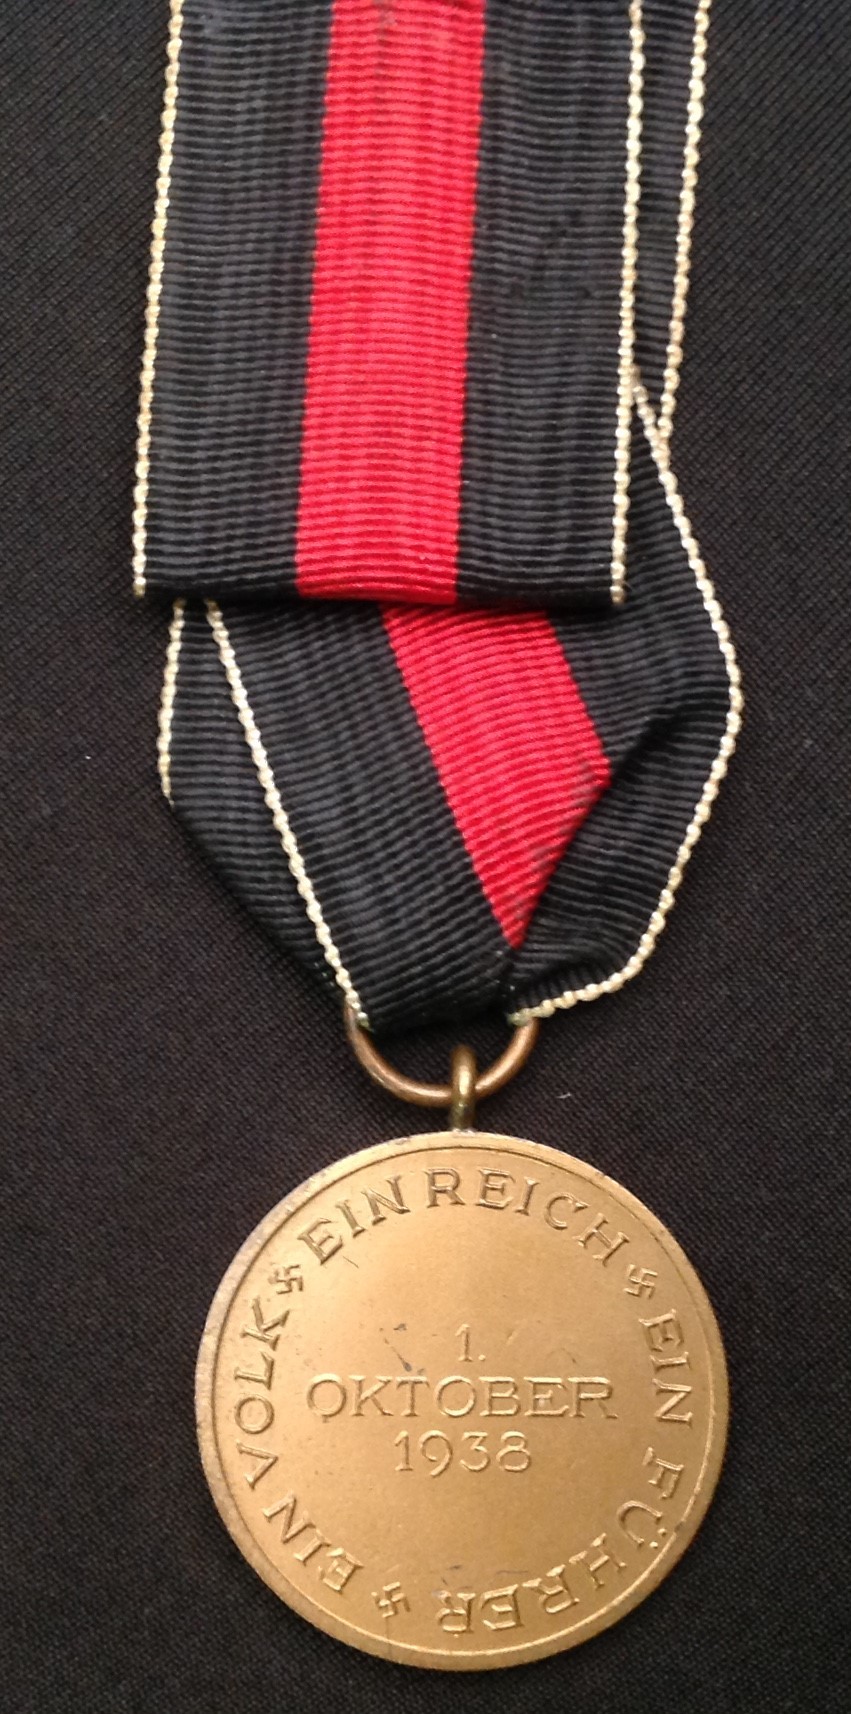 WW2 Third Reich Medaille zur Erinnerung an den 1. Oktober 1938 - Commemorative Medal October 1st - Image 2 of 2